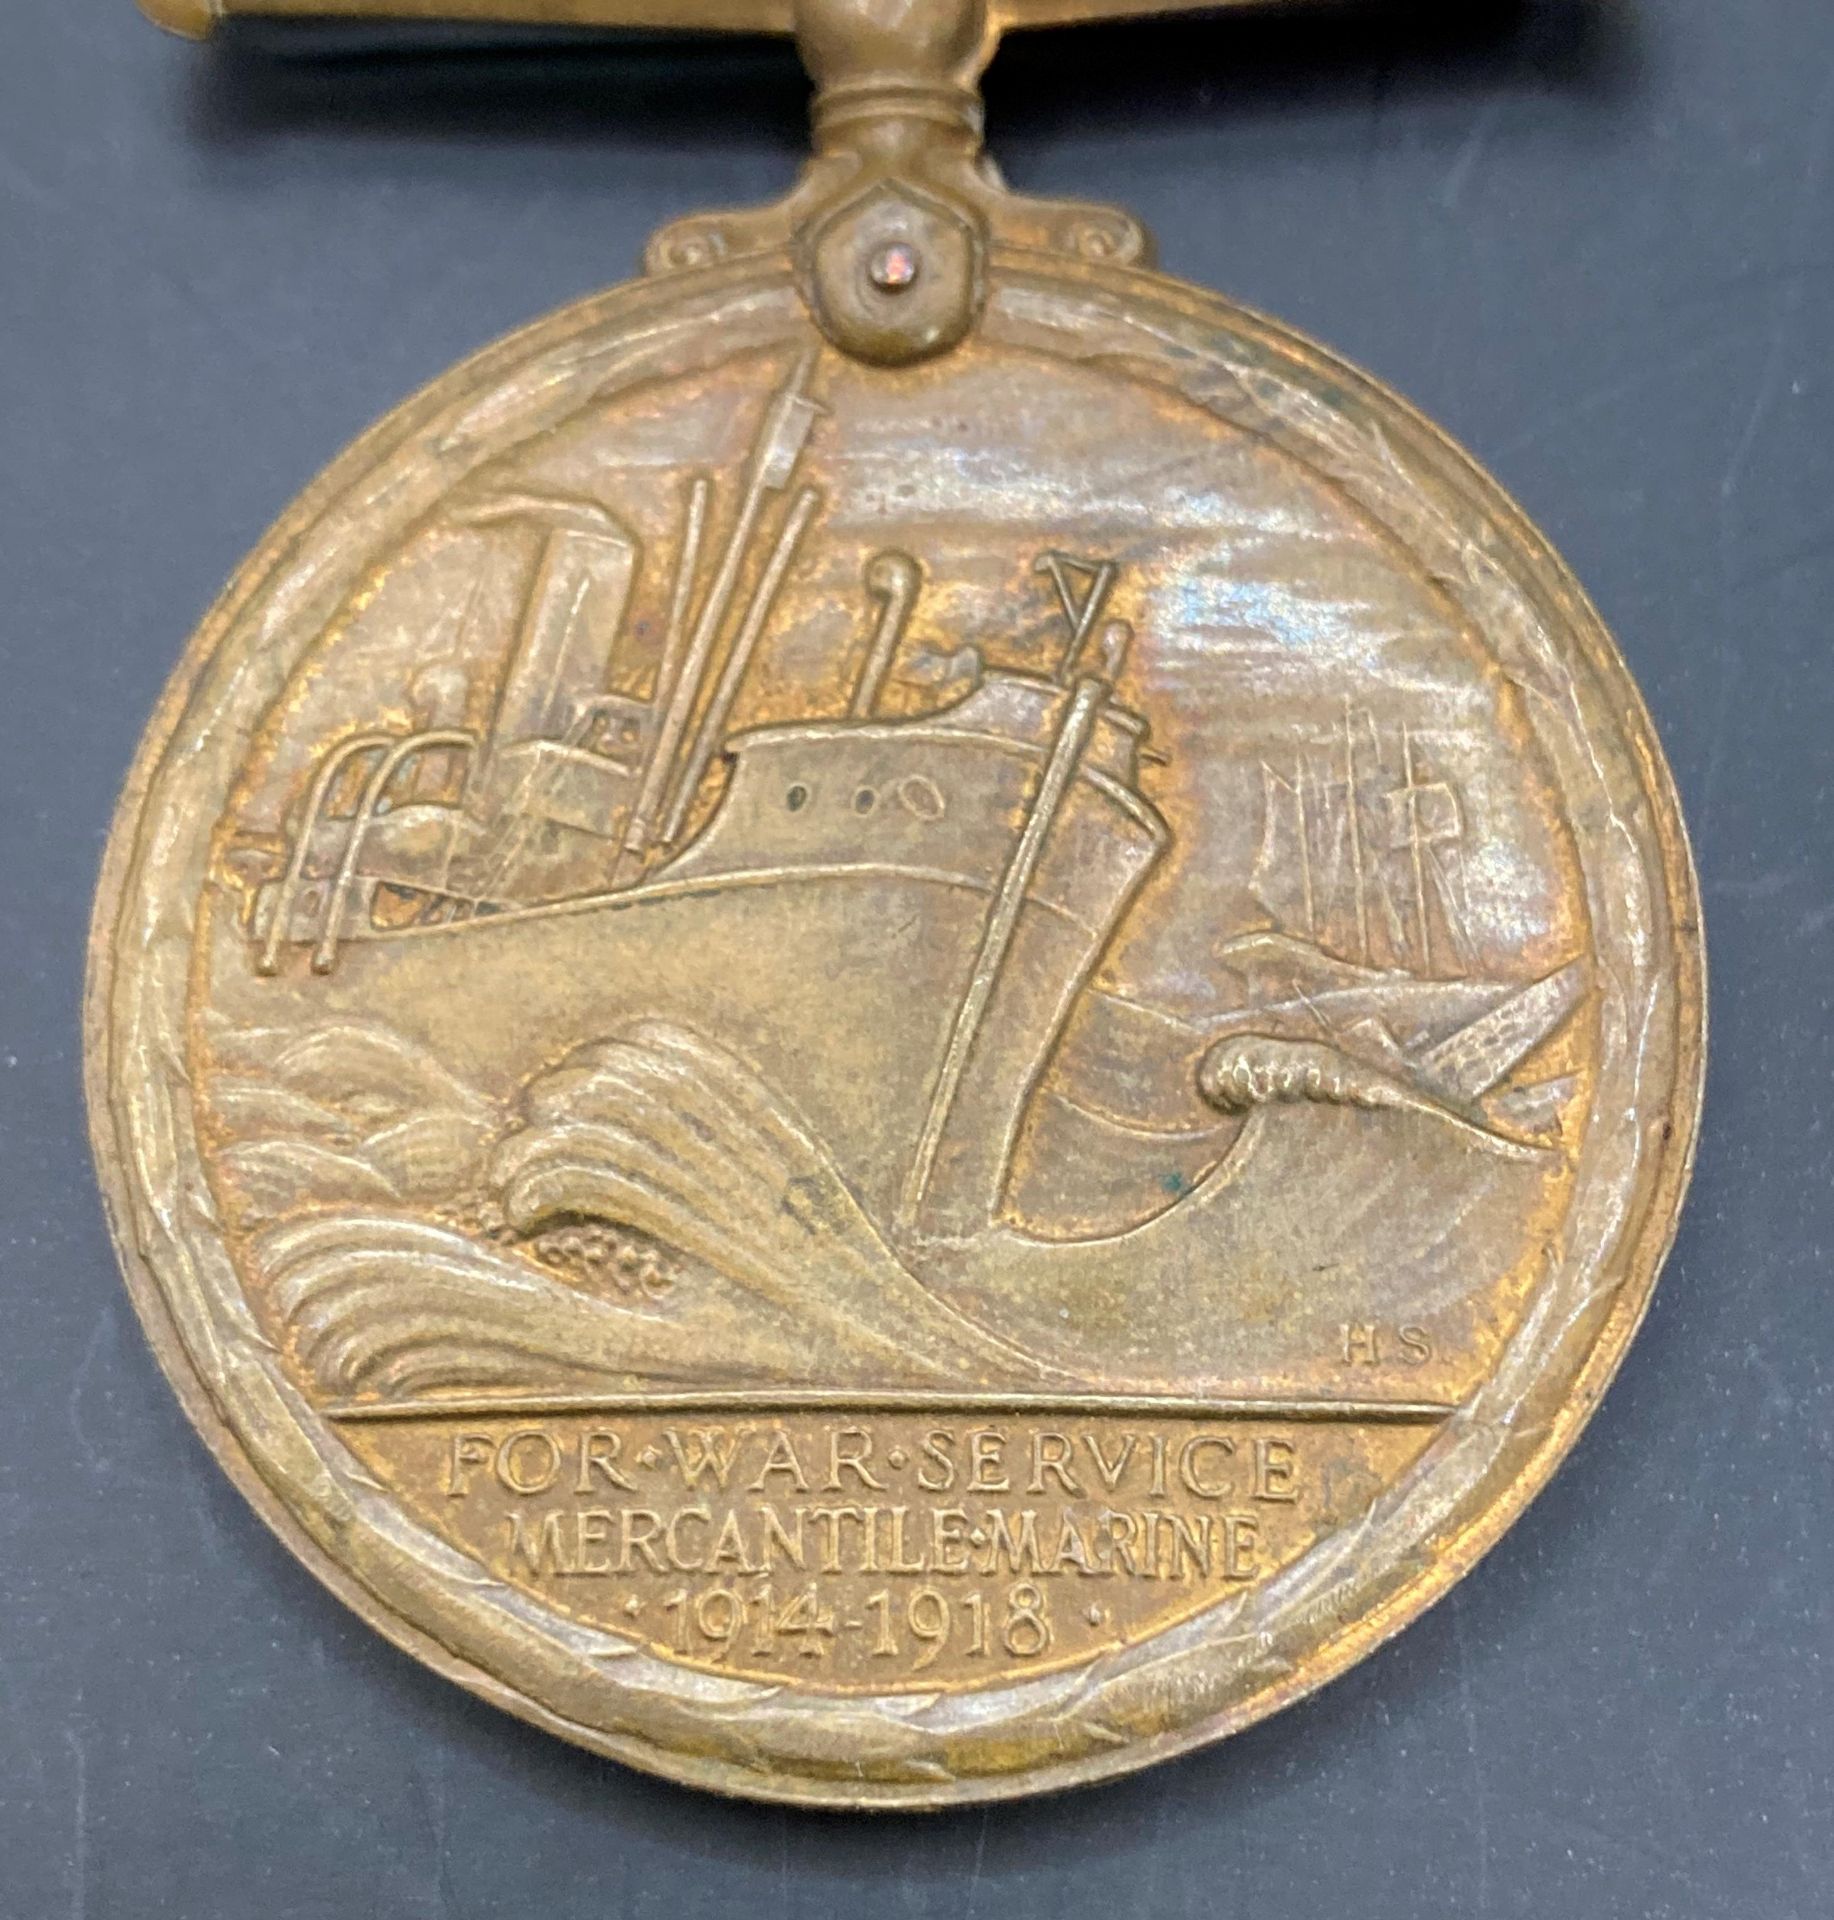 Charles Pascoe Dumaresq, (1883-1944). Mercantile Marine War Medal, (C.P. DUMARESQ.). - Image 2 of 4